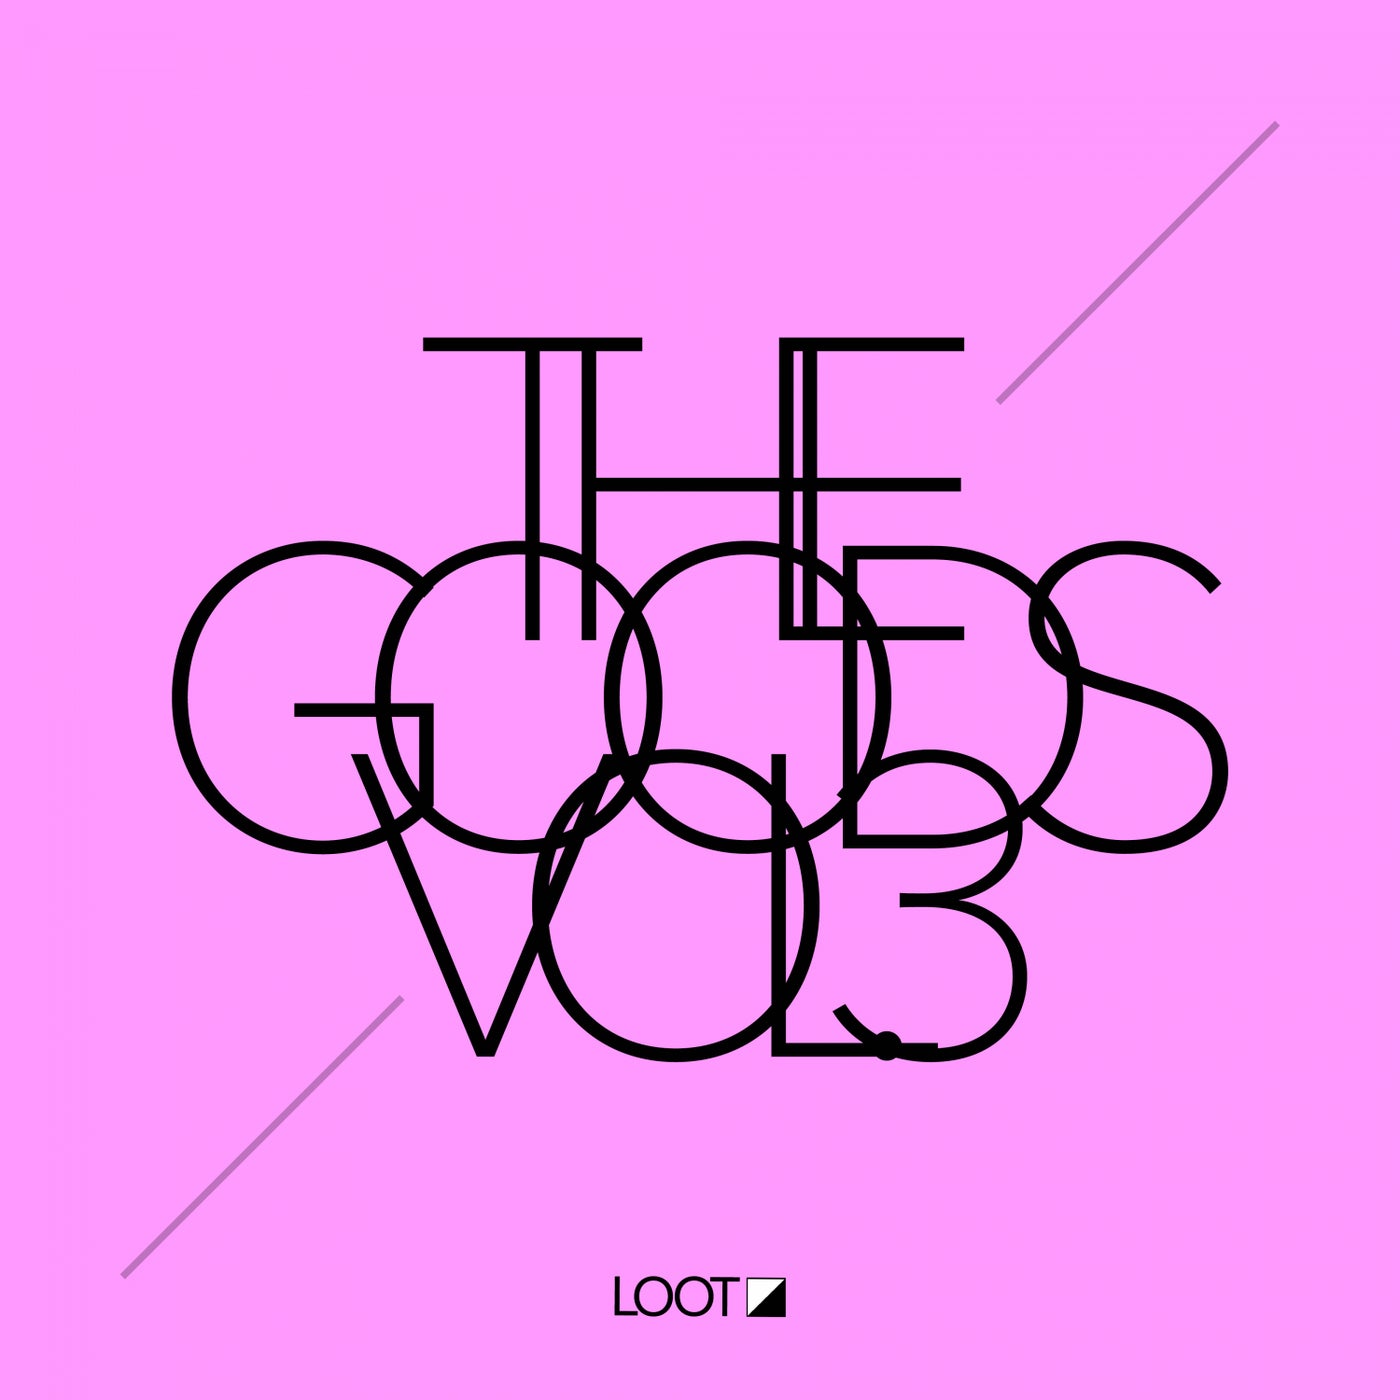 The Goods, Vol. 3